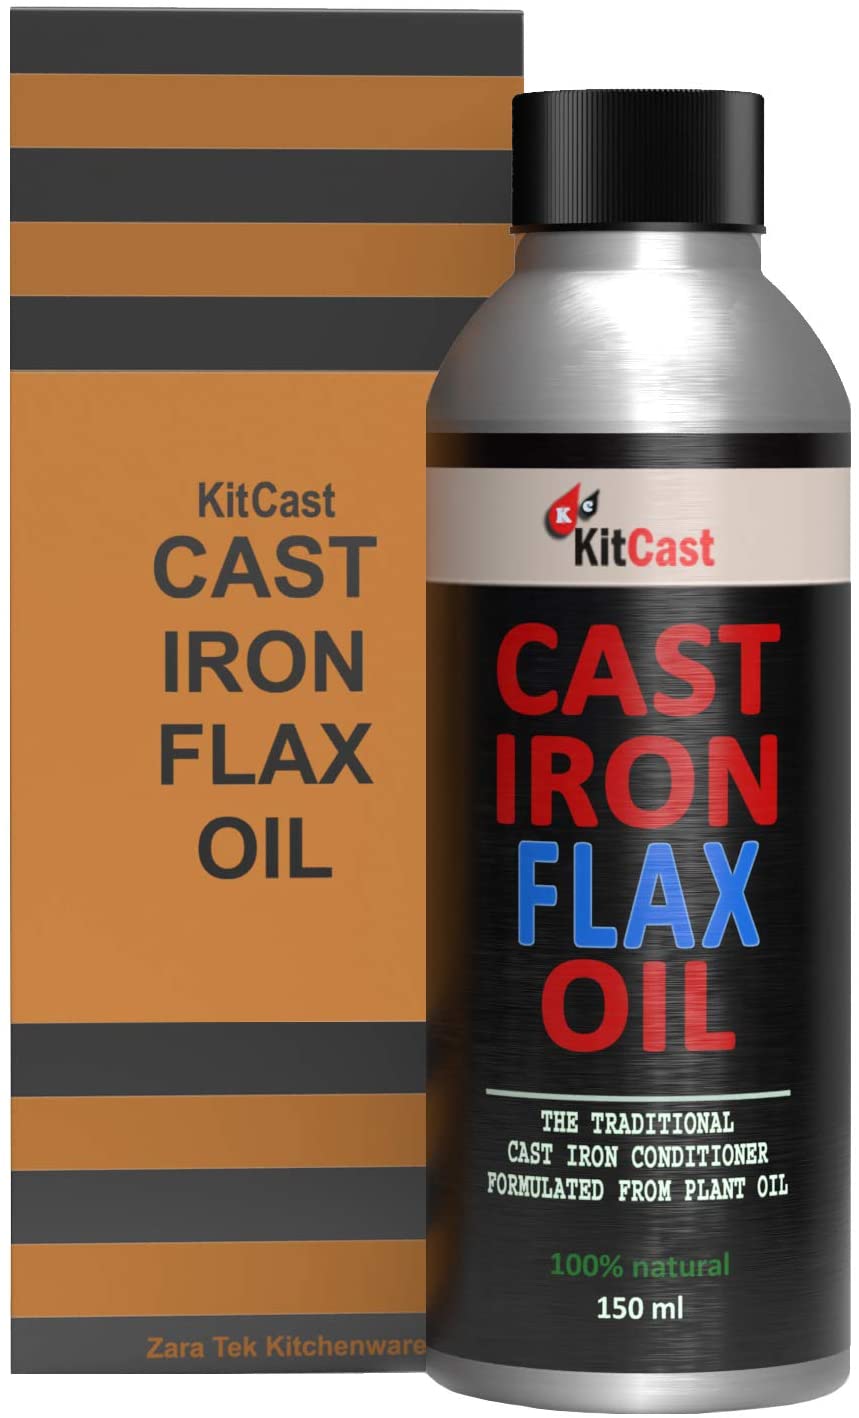 KitCast Natural Cast Iron Flax Oil